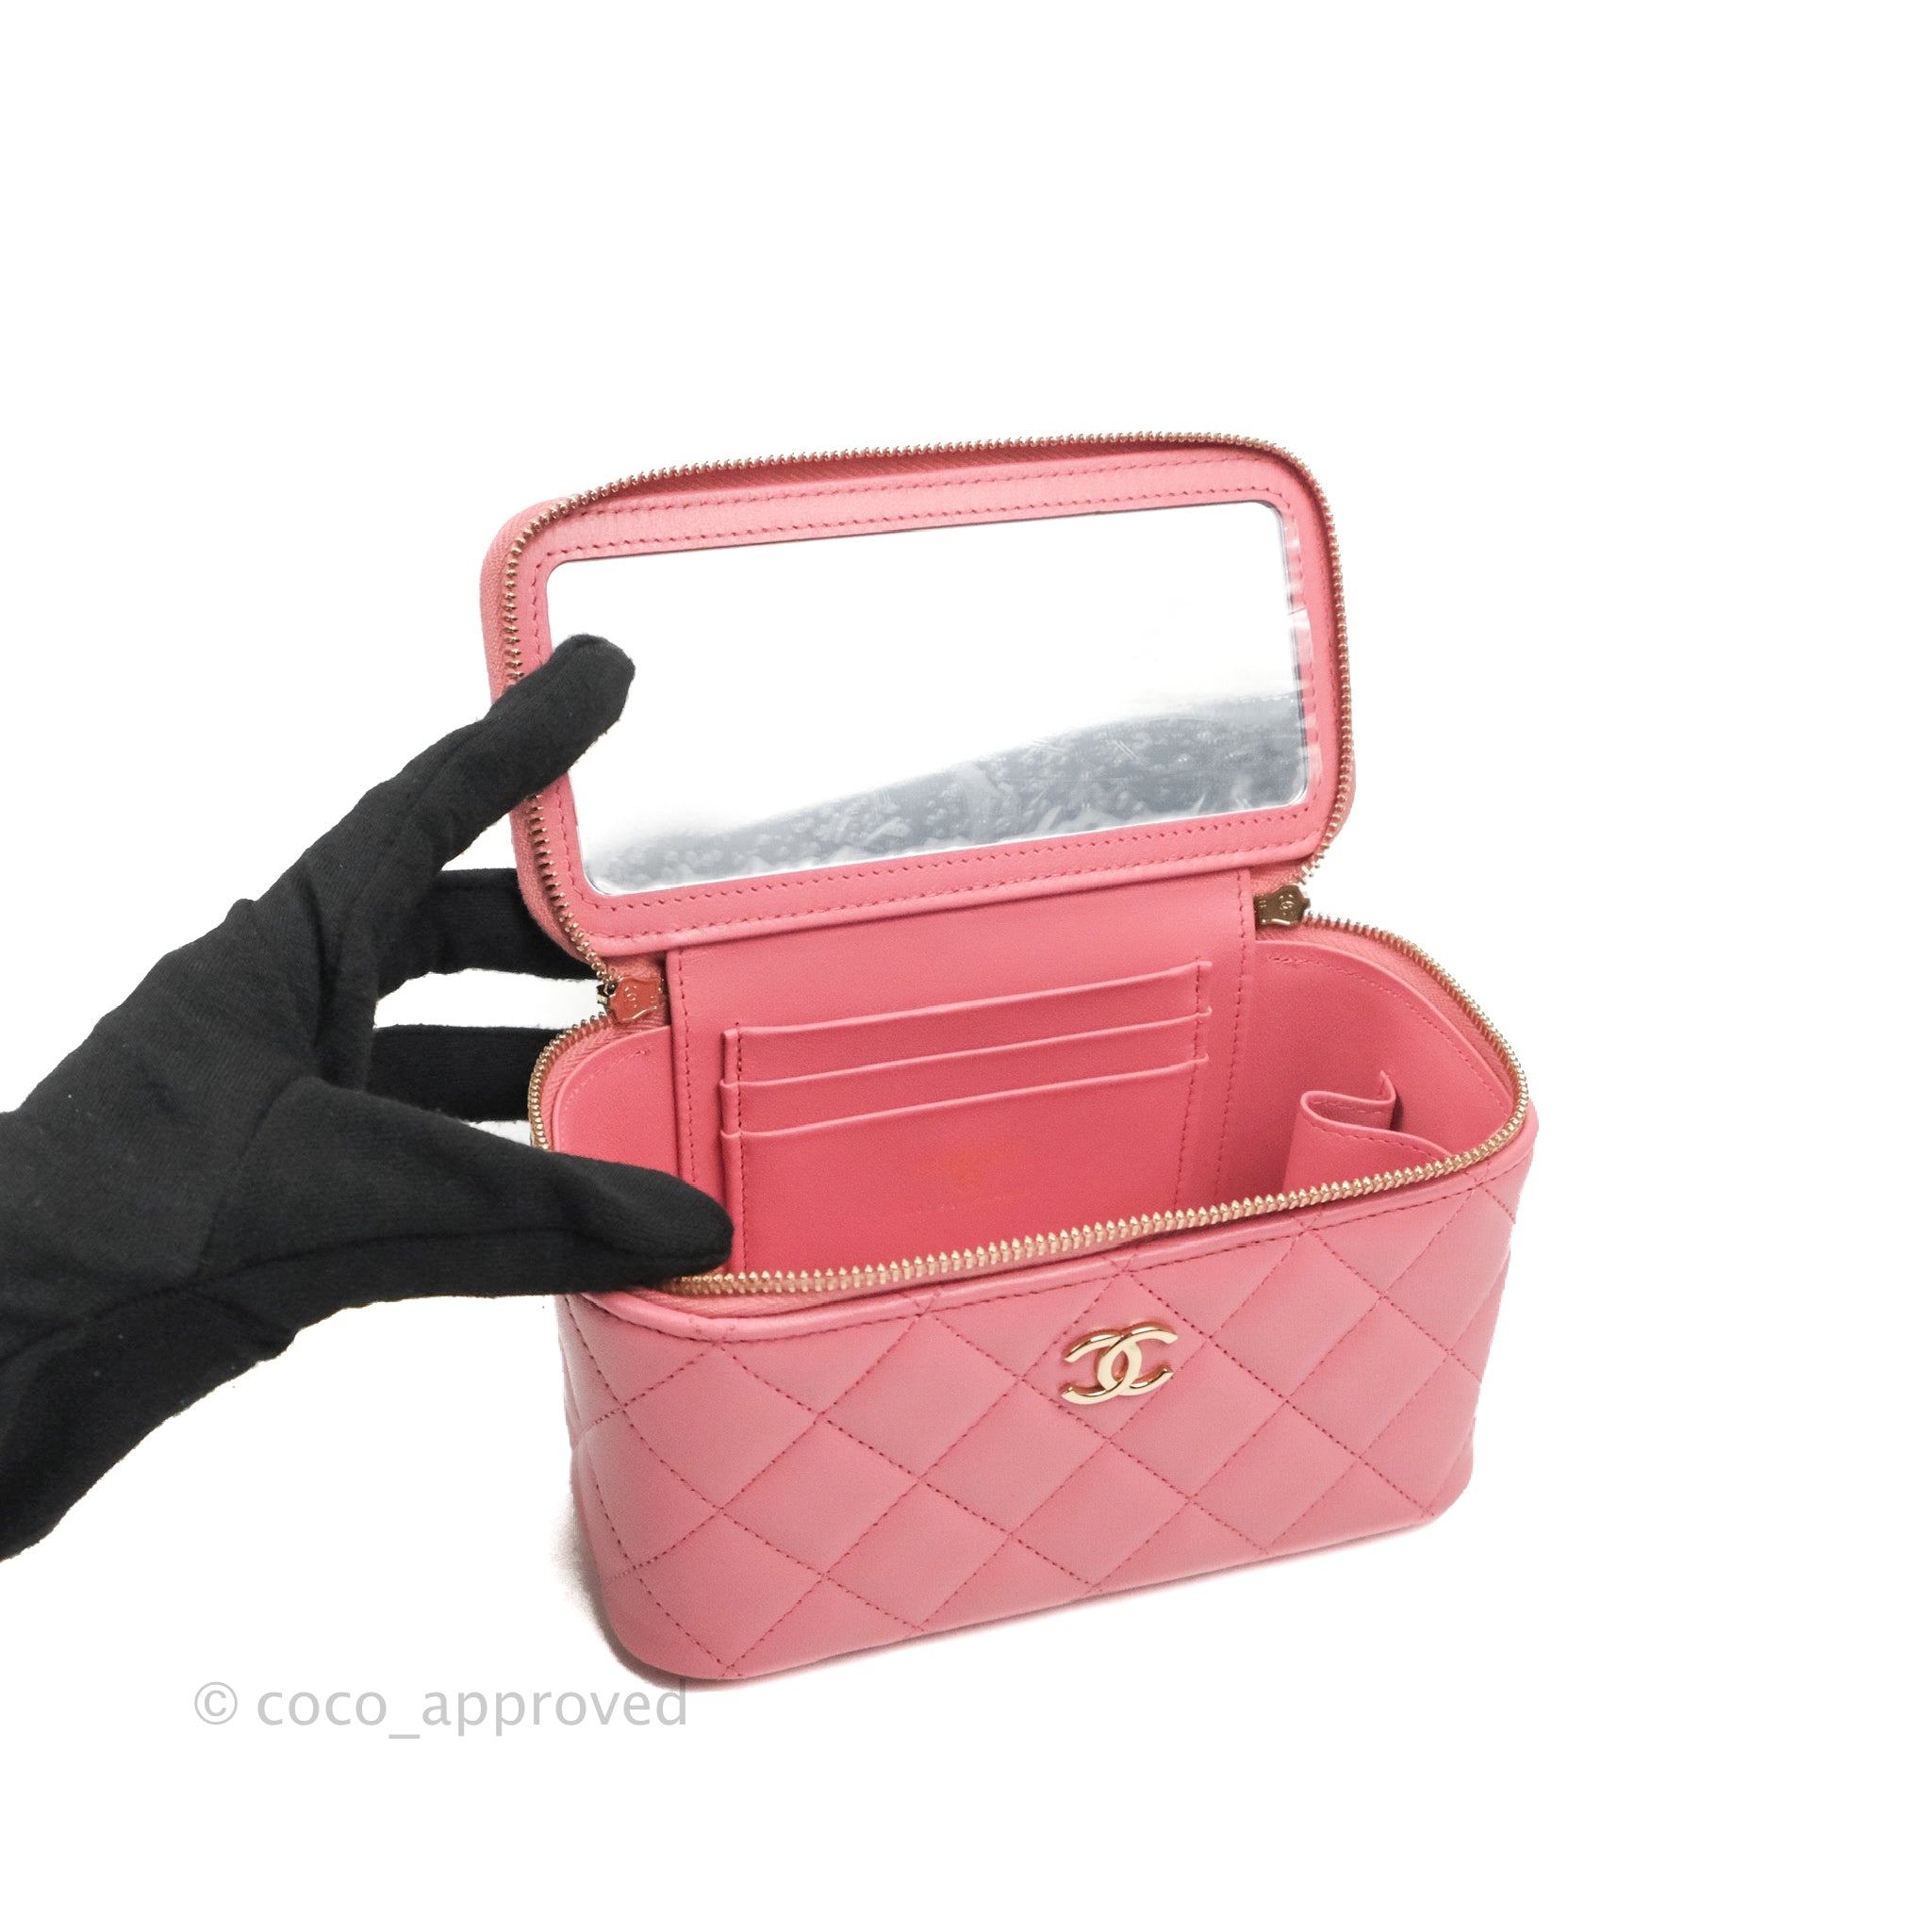 CHANEL 22S Pink Lamb Skin Rectangular Pearl Crush Vanity Gold Hardware –  AYAINLOVE CURATED LUXURIES